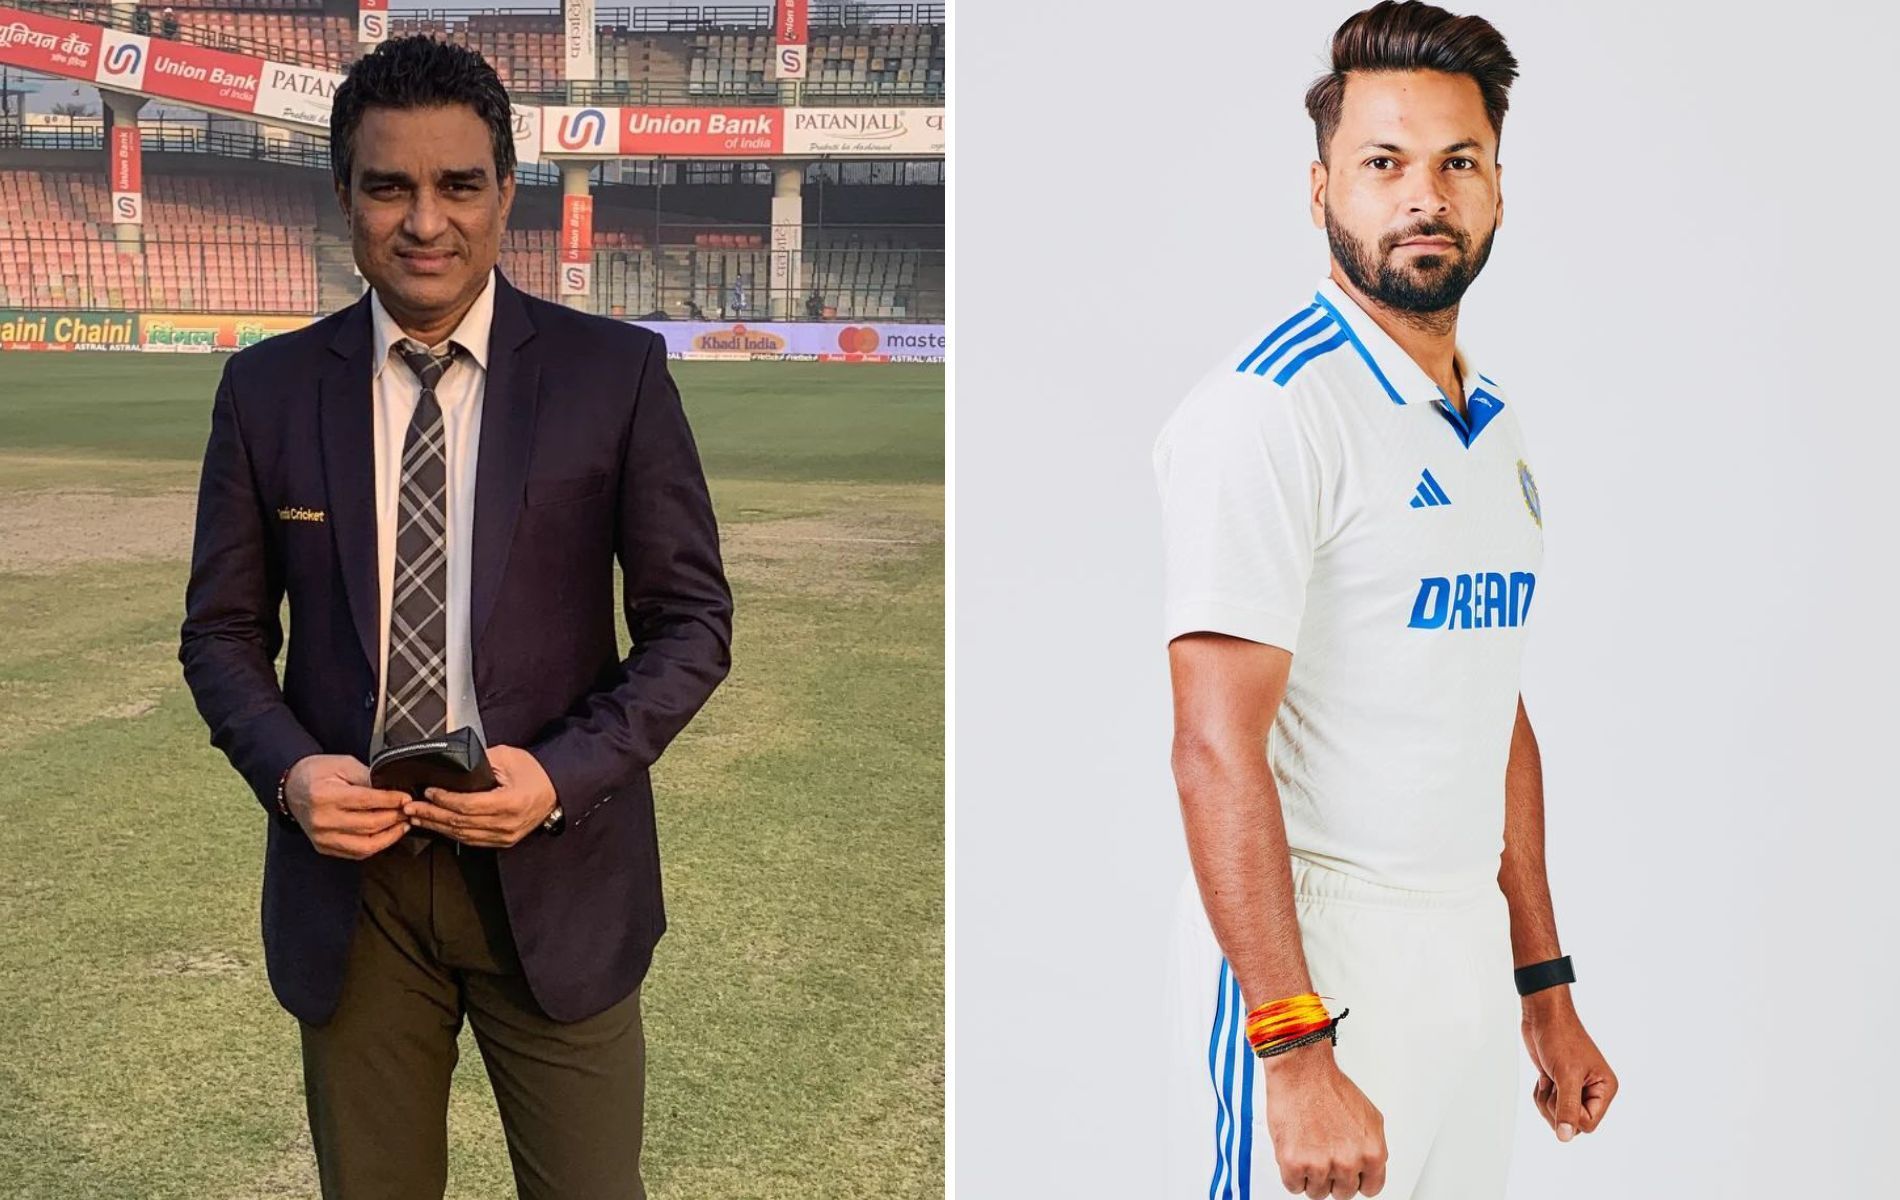 Mukesh Kumar (L) and Sanjay Manjrekar. (Pics: Instagram)